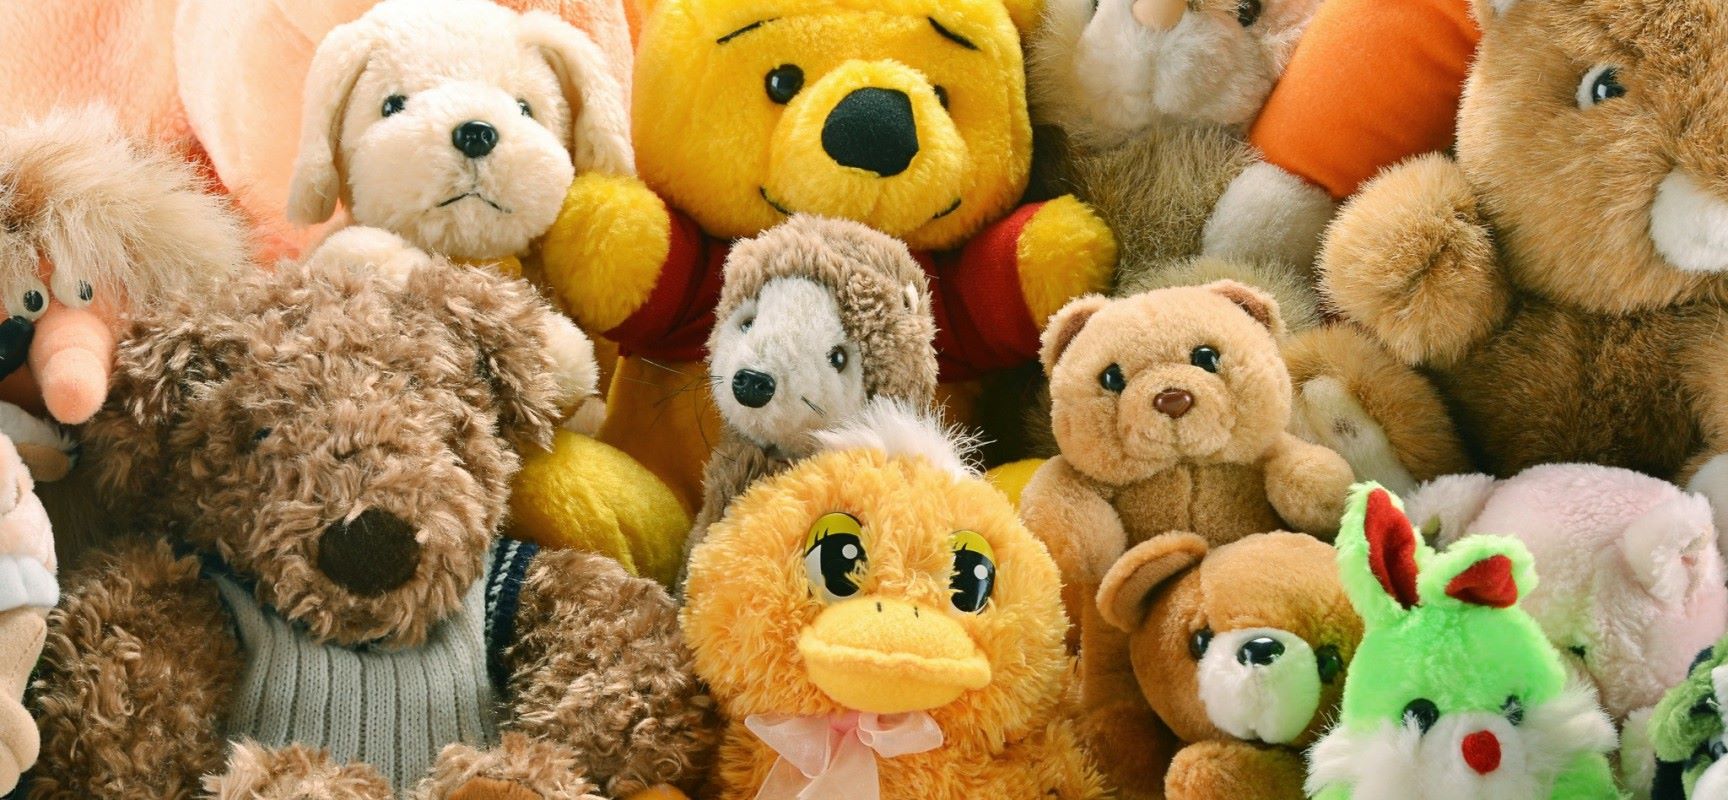 Stuffed Animal Review: The Perfect Plush Companion